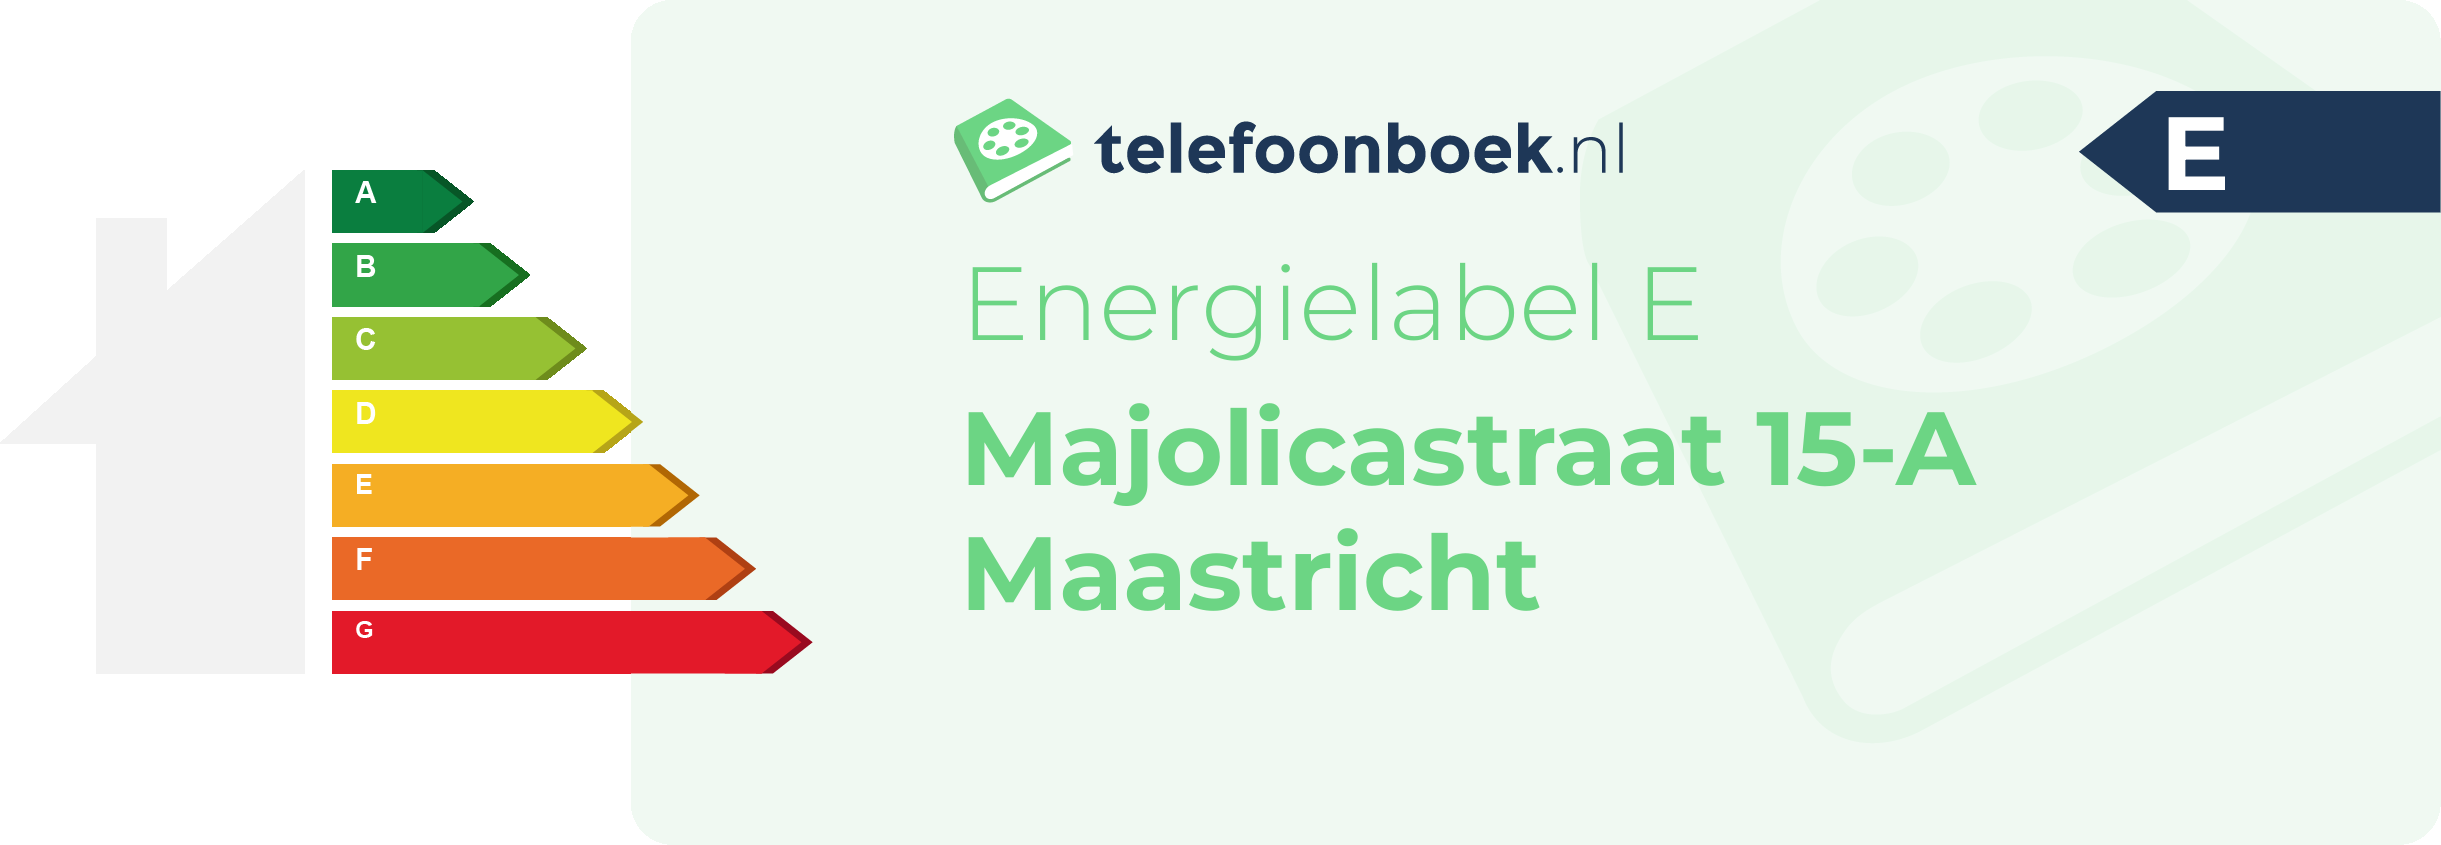 Energielabel Majolicastraat 15-A Maastricht